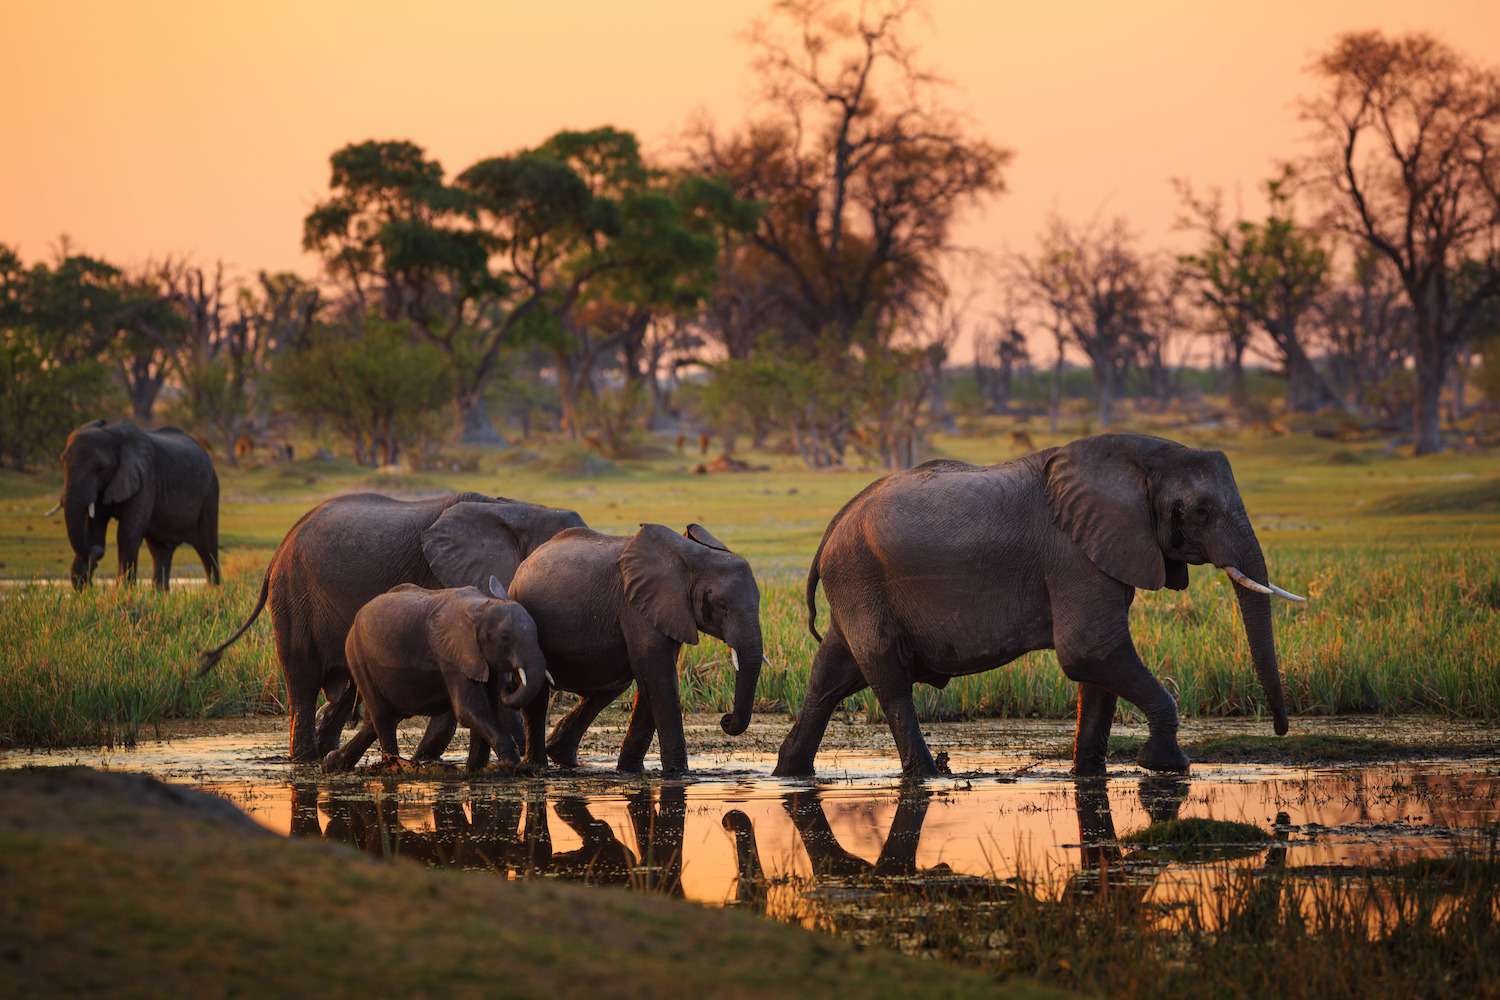 Elephants in Moremi National Park - Botswana.